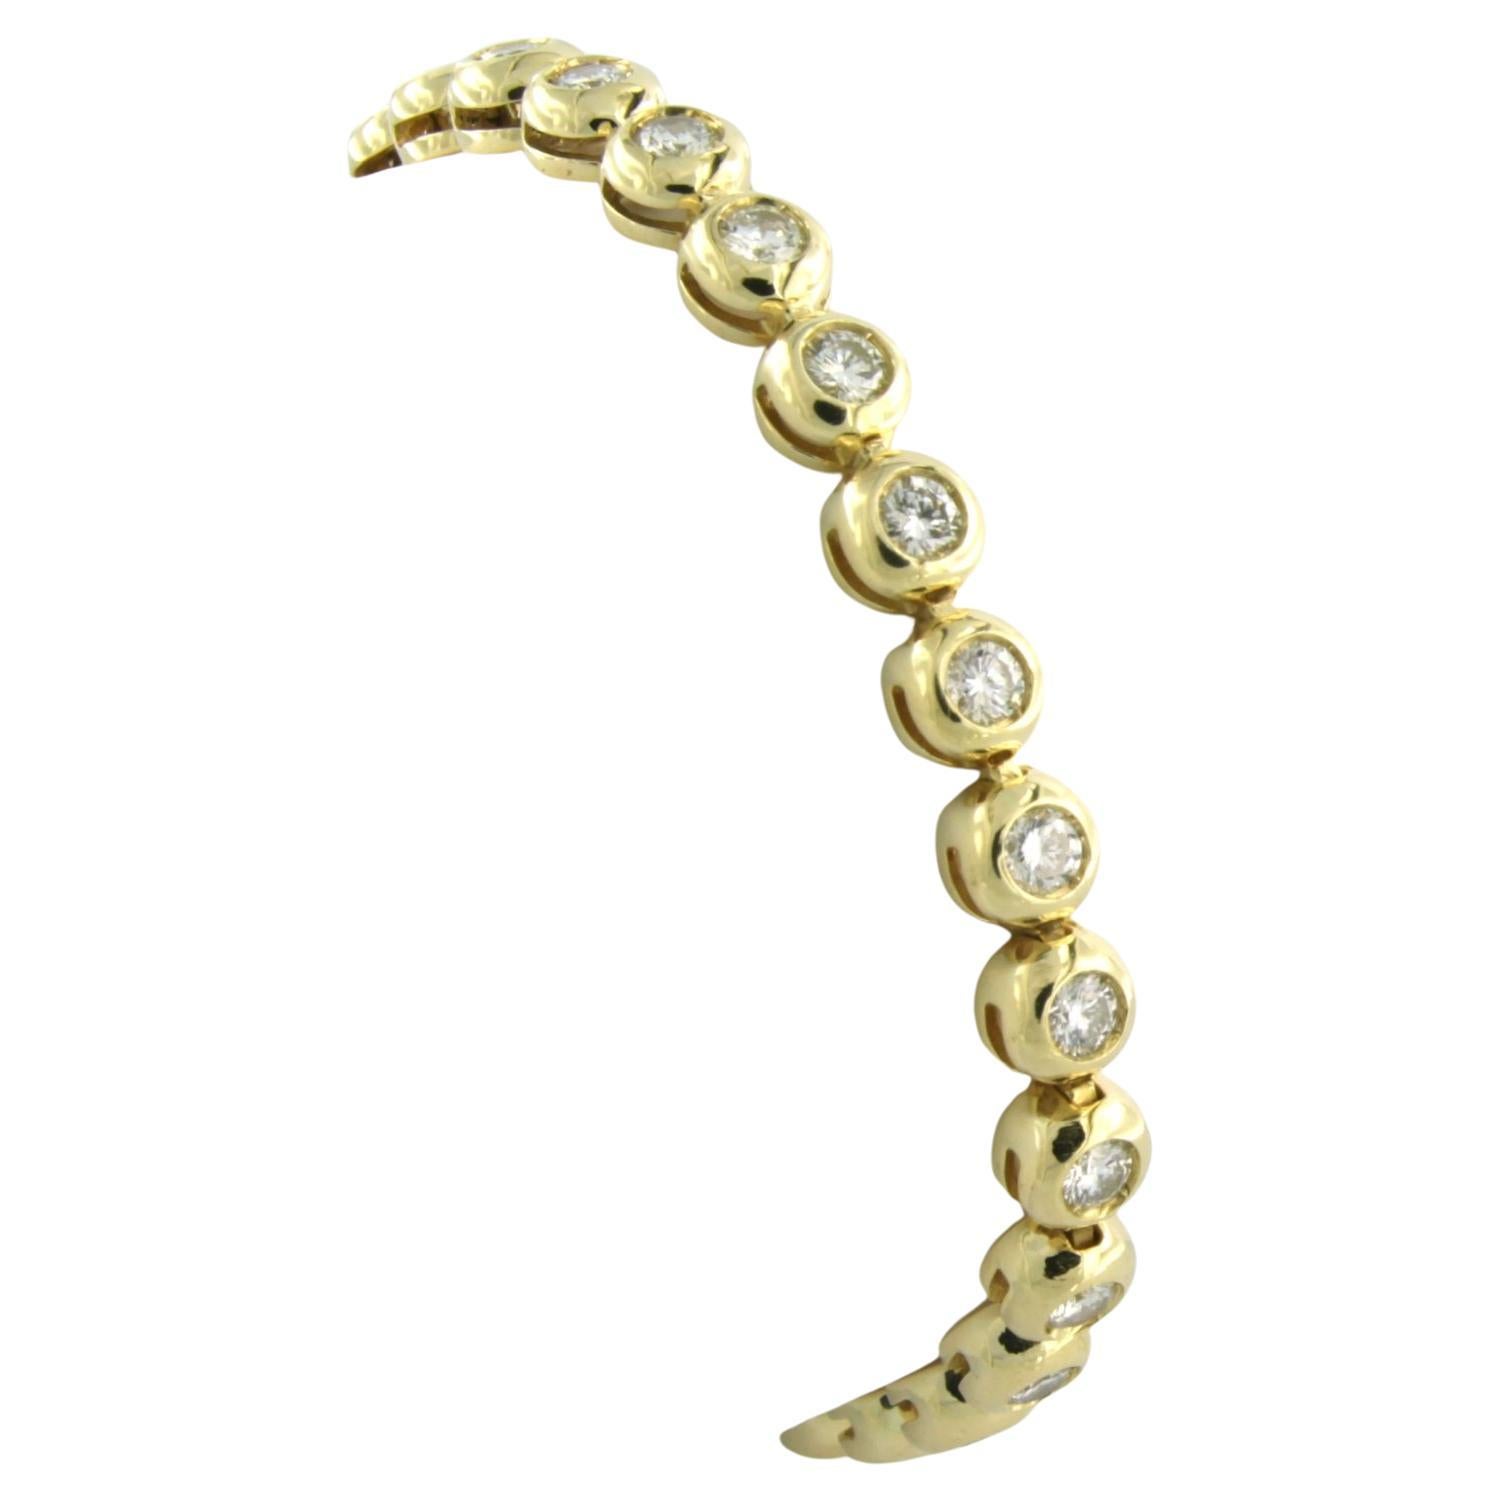 Tennis bracelet with diamonds 18k yellow gold